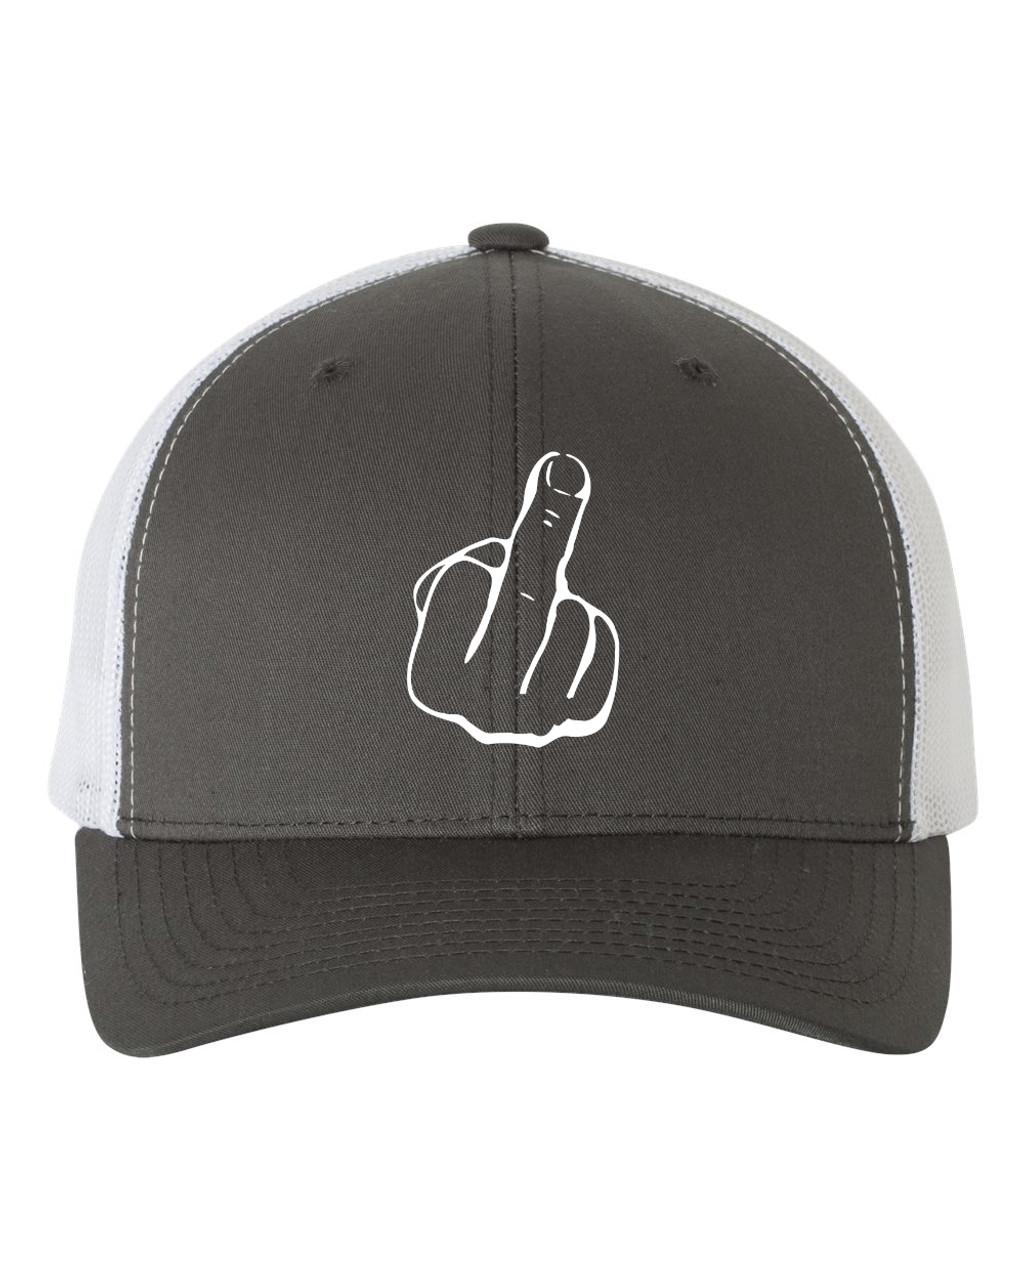 Middle Finger Original Heat Pressed Grey on White Curved Bill Hat - Adult Mesh Trucker Snap Back Cap